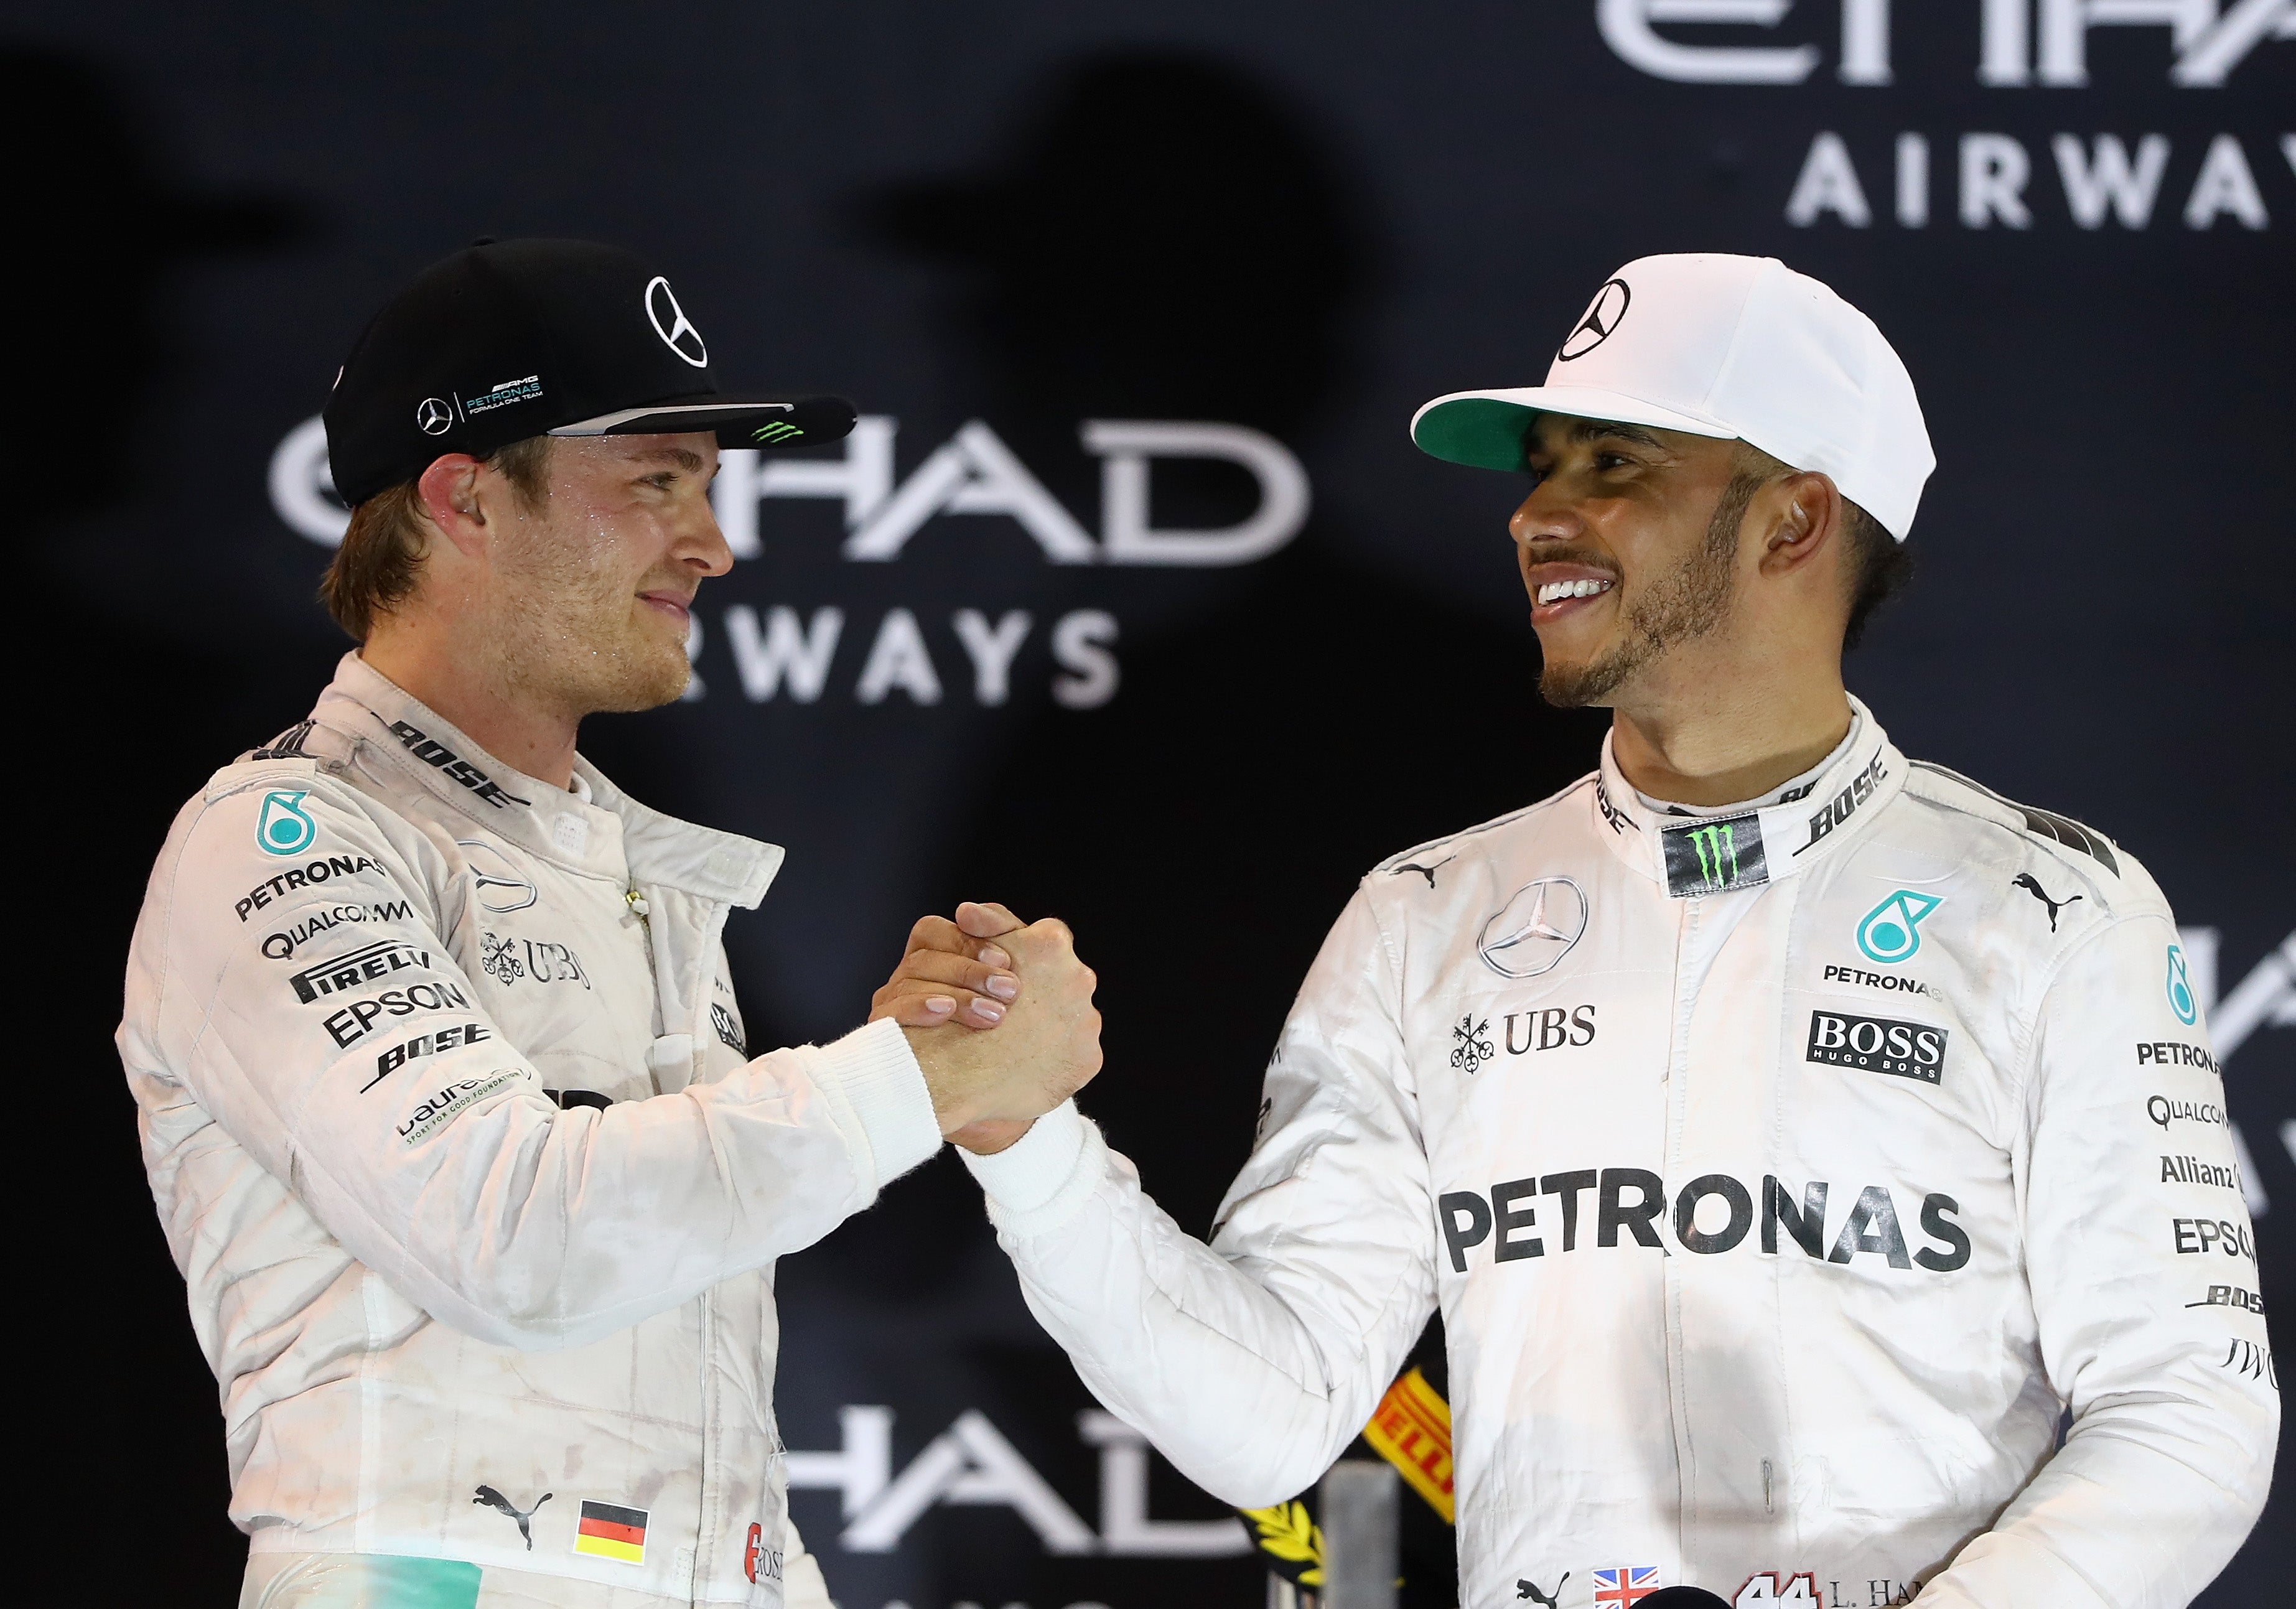 Lewis Hamilton and Nico Rosberg endured a fierce rivalry.